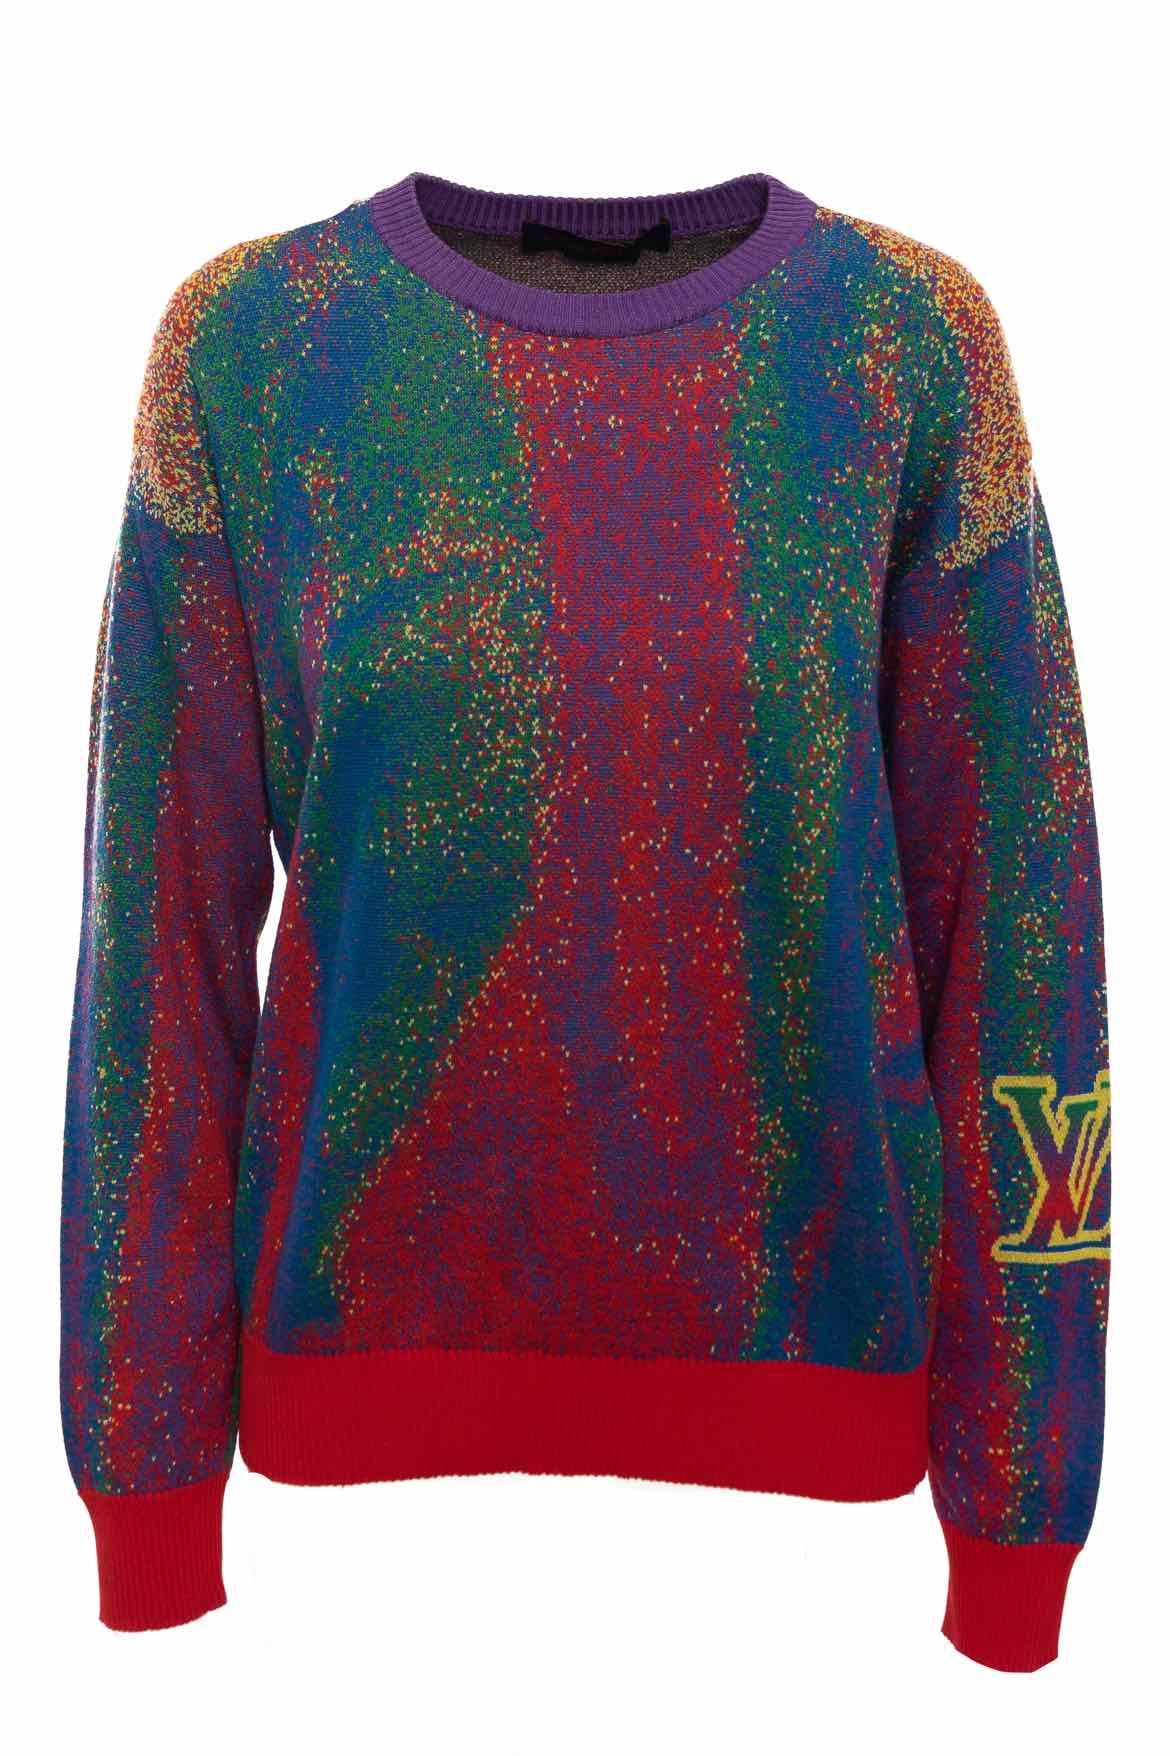 Louis Vuitton Authenticated Cashmere Knitwear